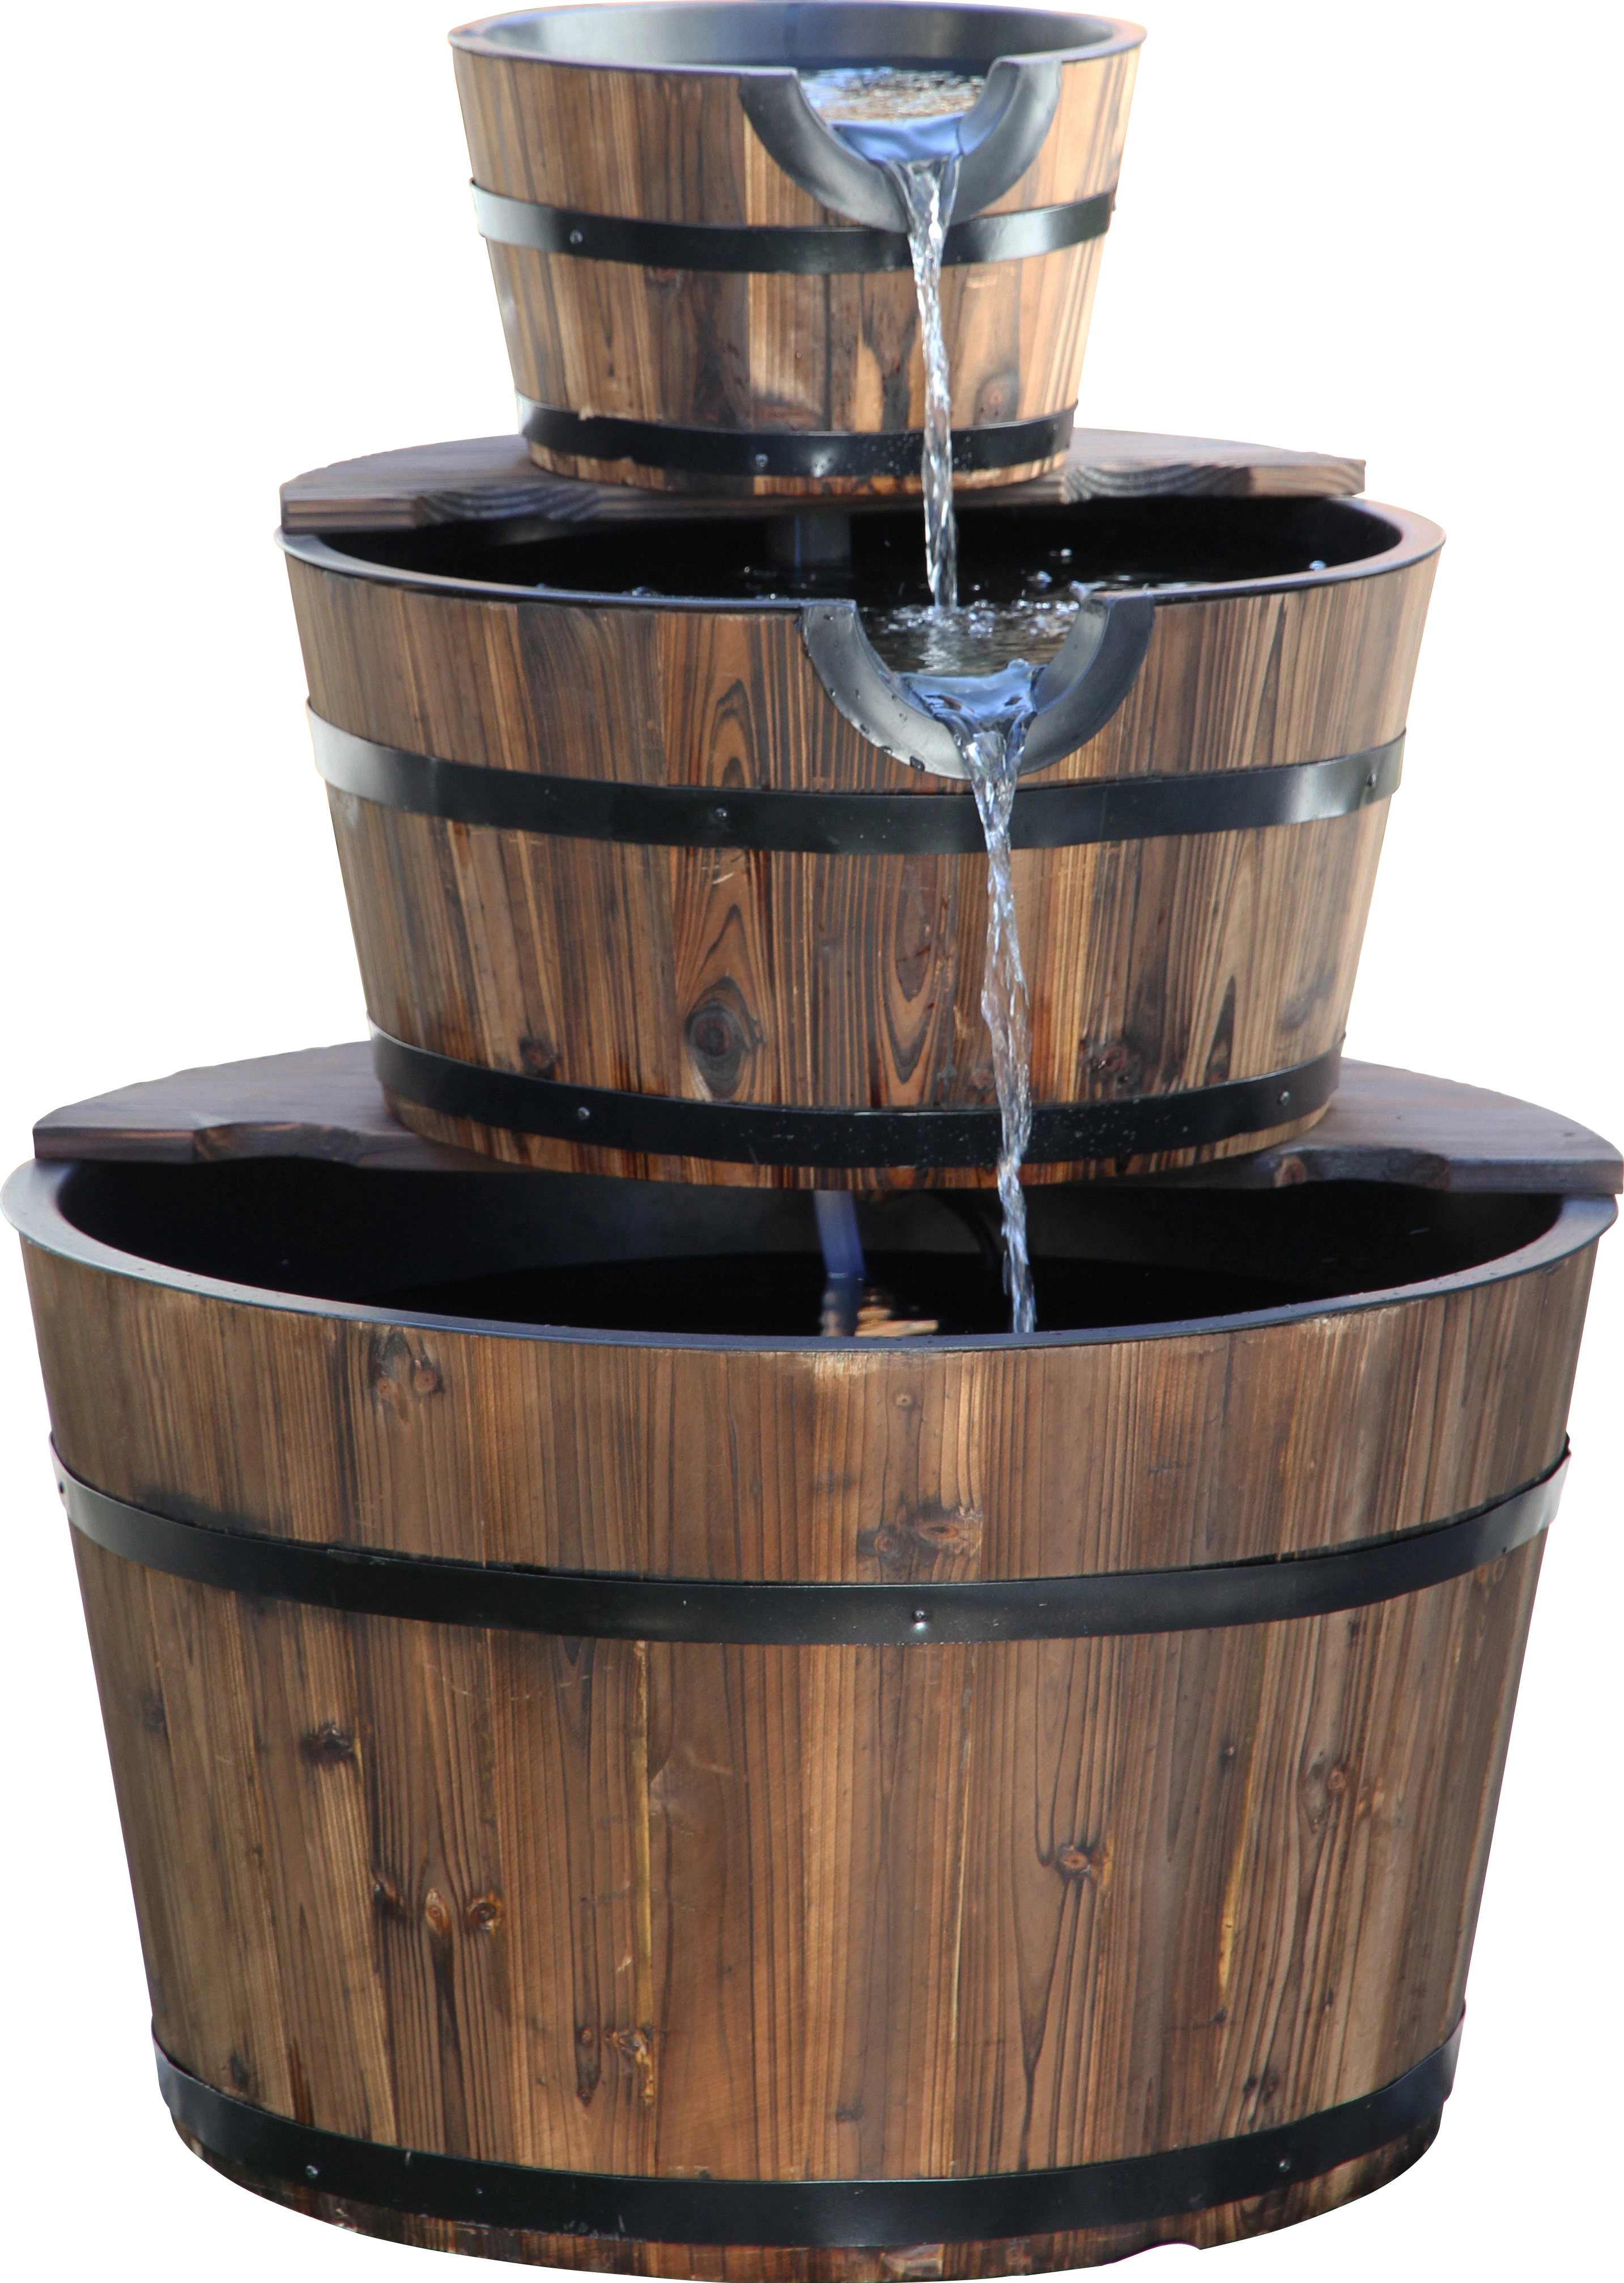 Silex Holzfaß Brunnen Mosel kaufen bei OBI